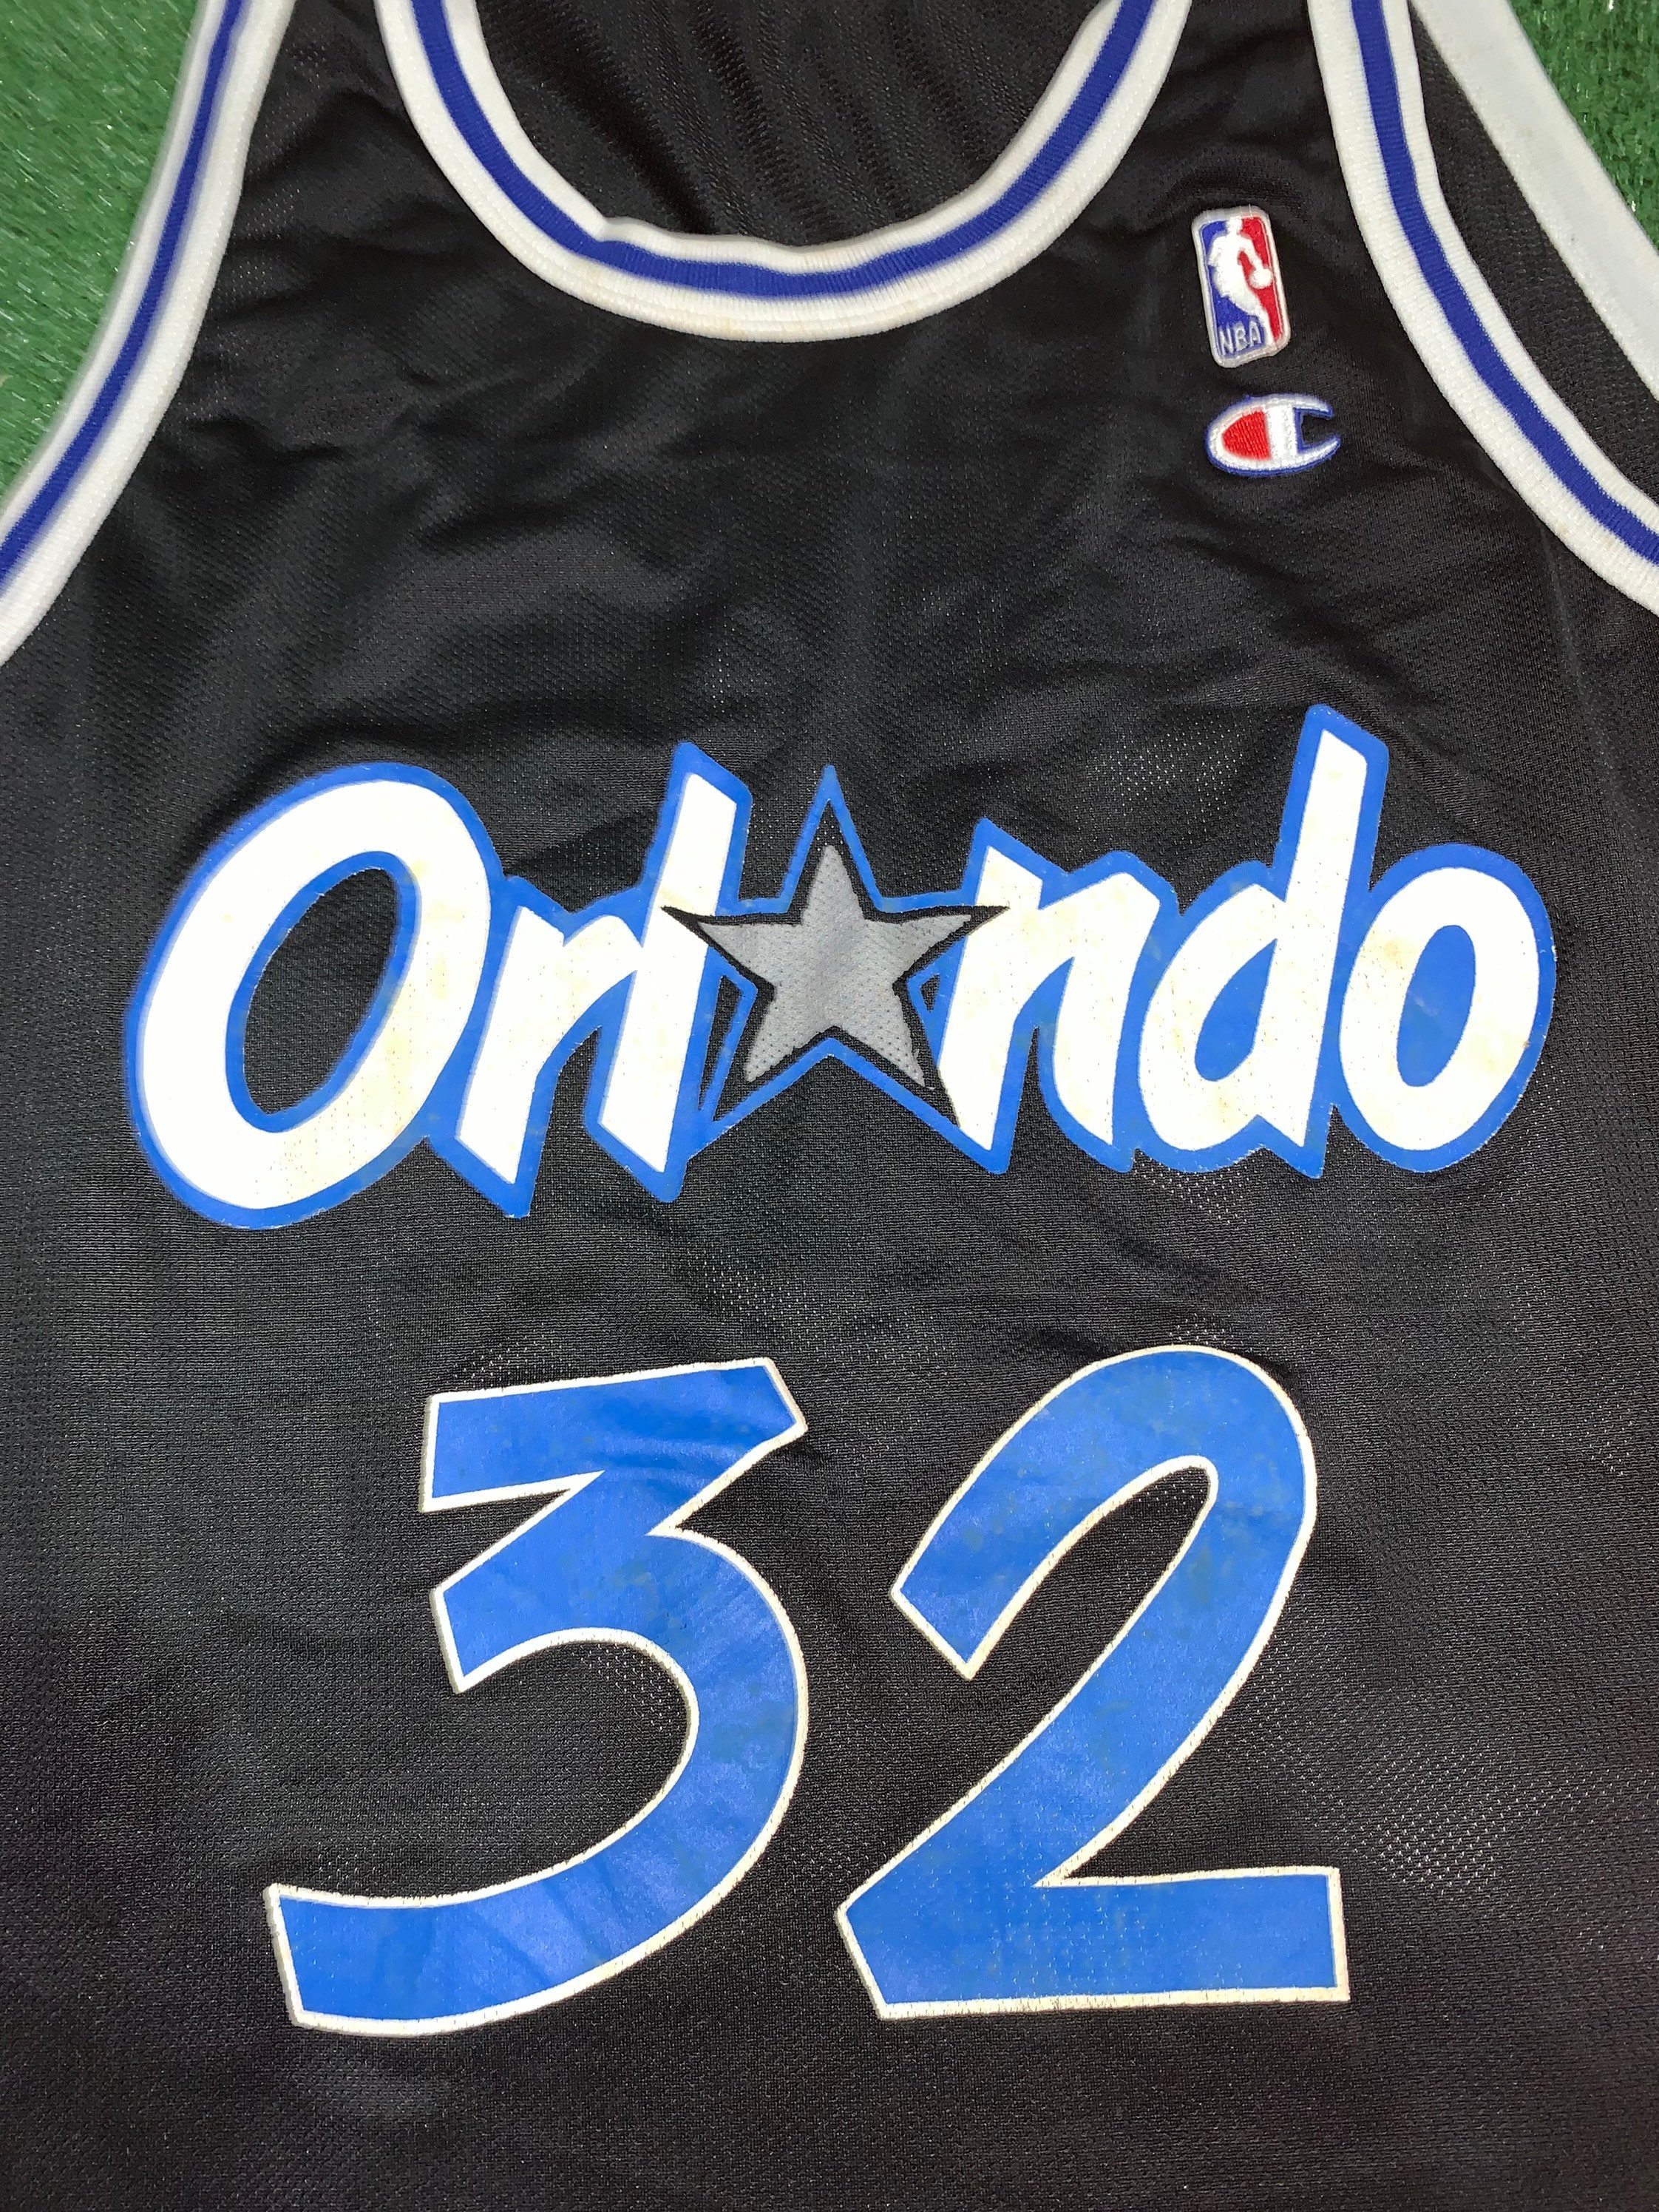 Black and Blue #32 SHAQ Orlando Magic Champion Jersey - 5 Star Vintage